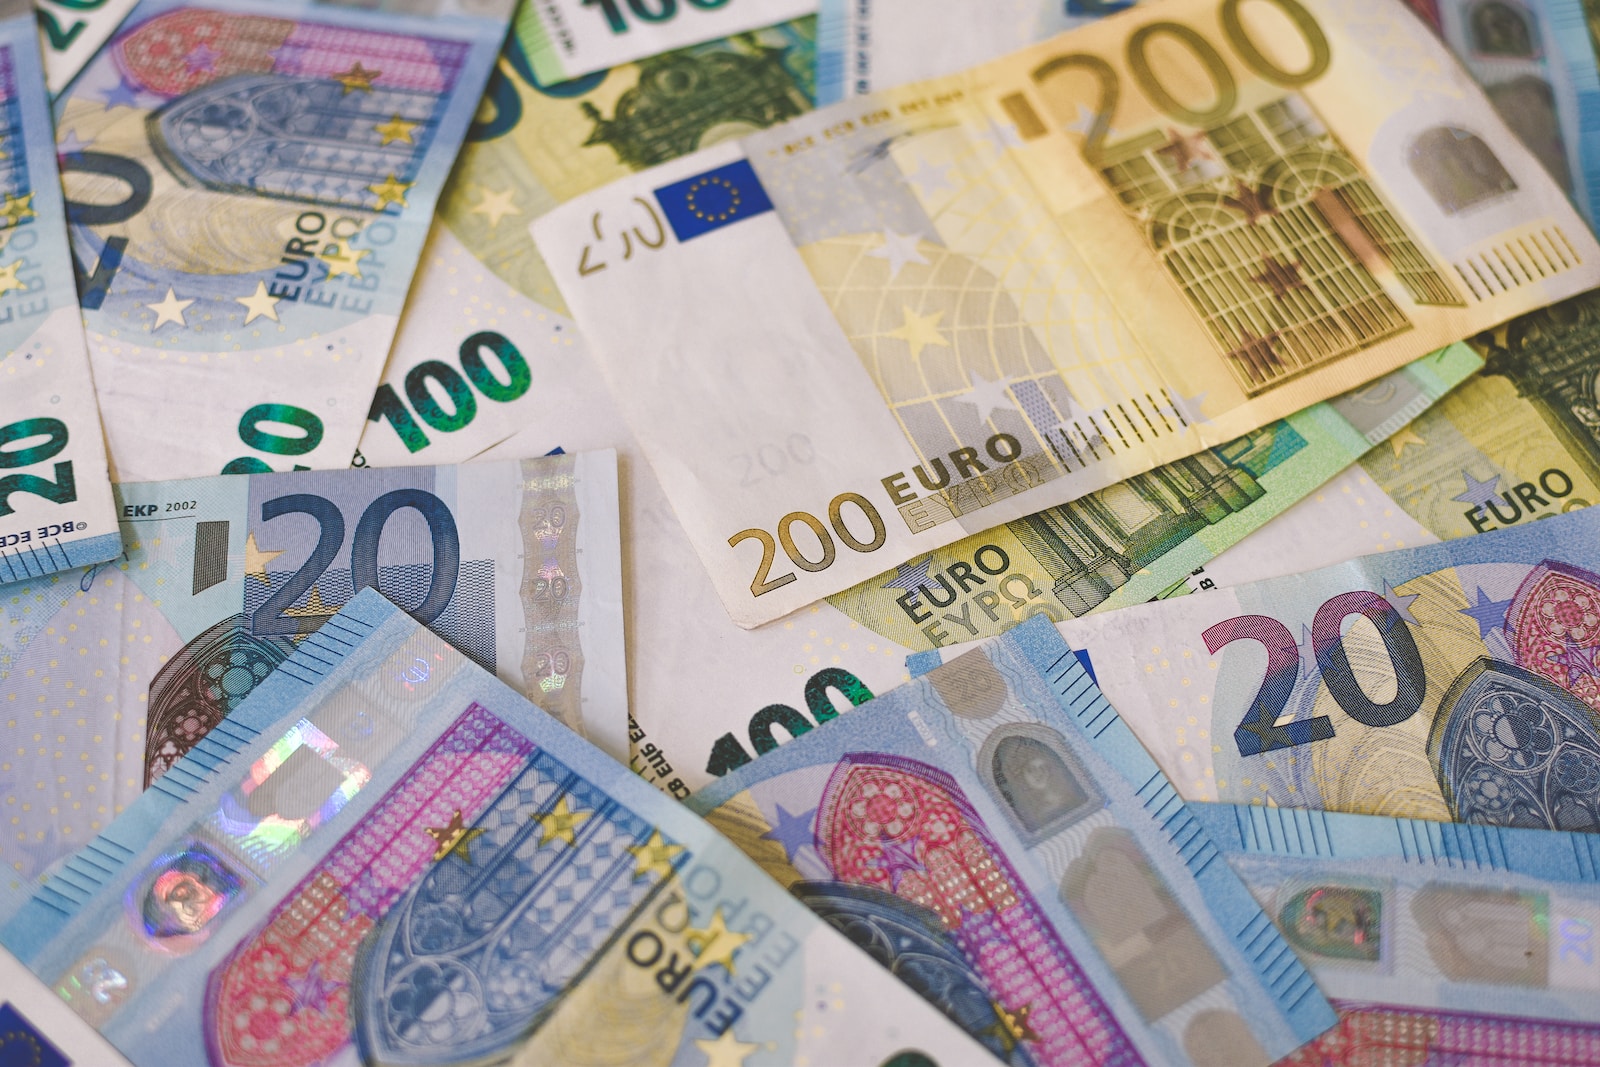 eu news - 20 euro bill on white printer paper